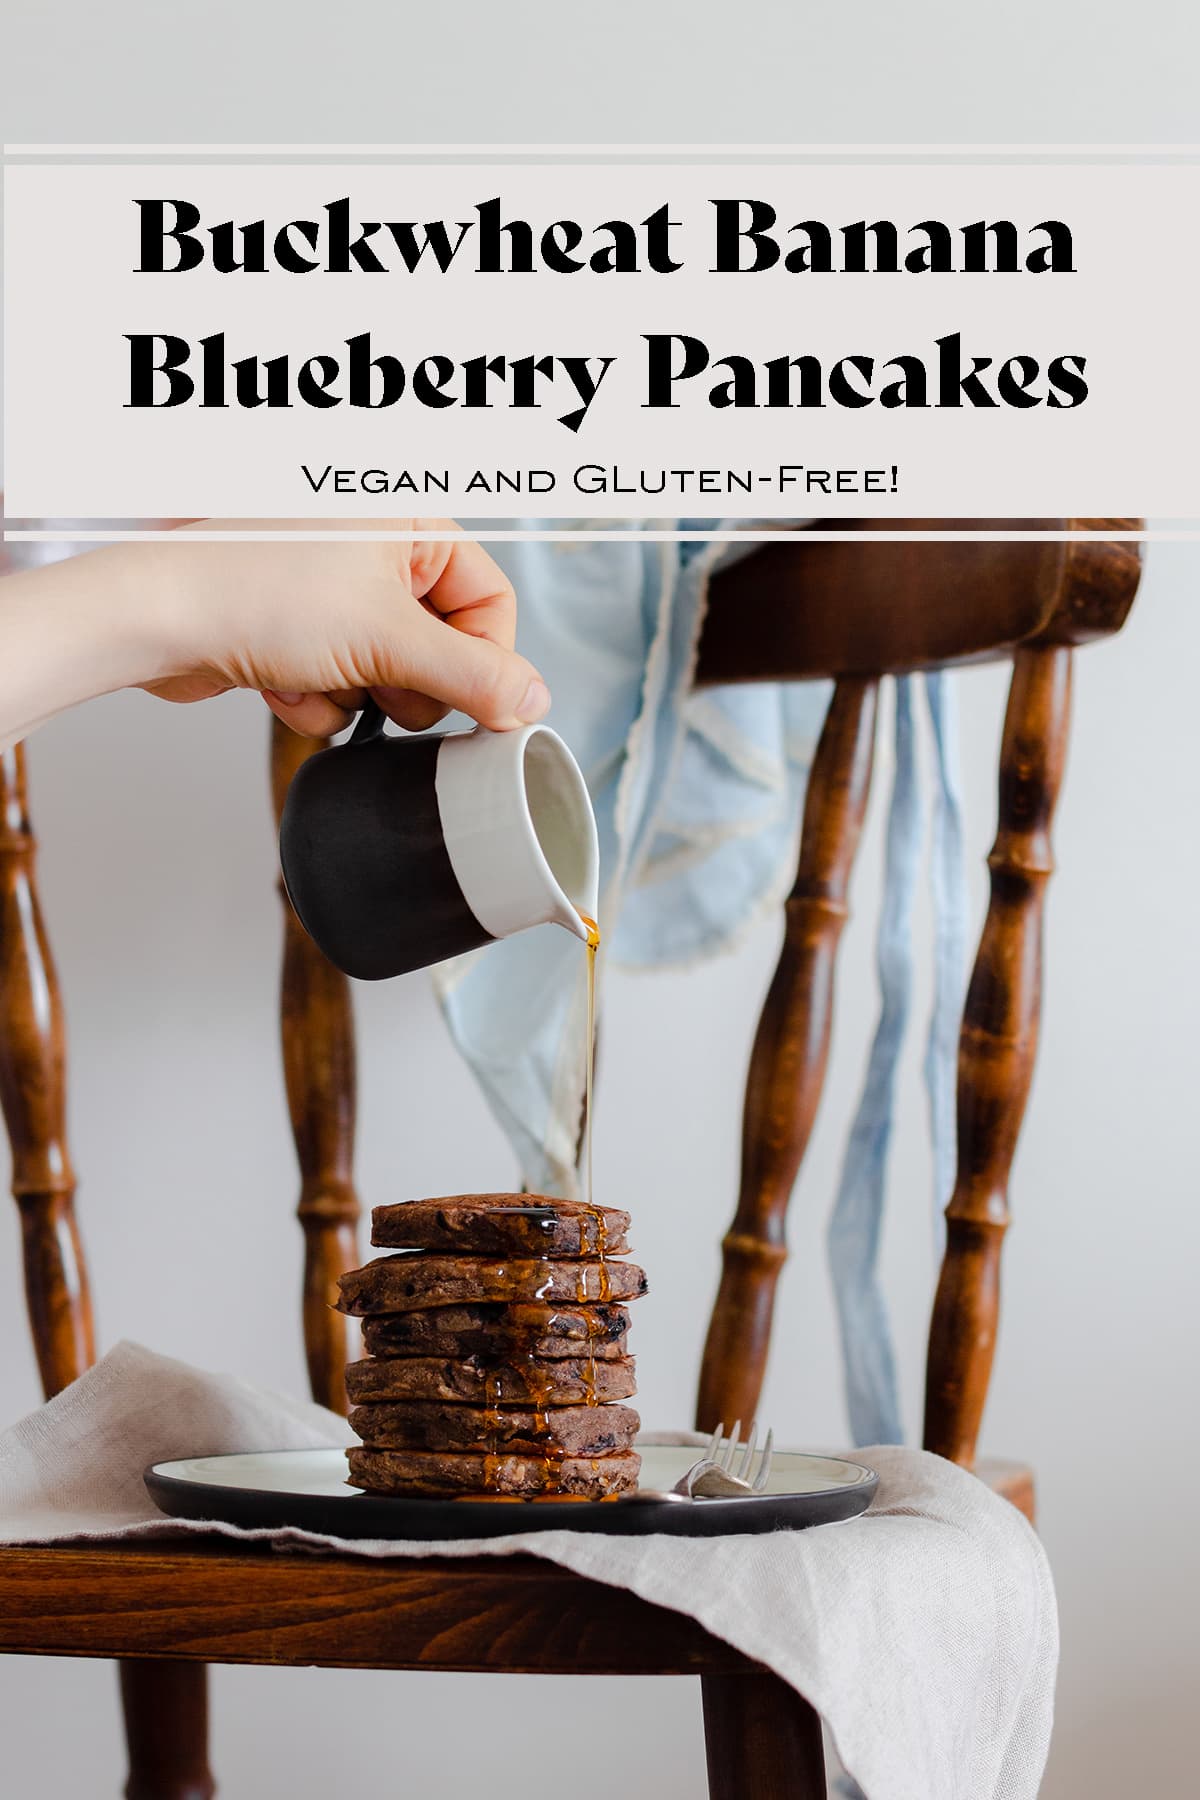 Buckwheat Banana Blueberry Pancakes